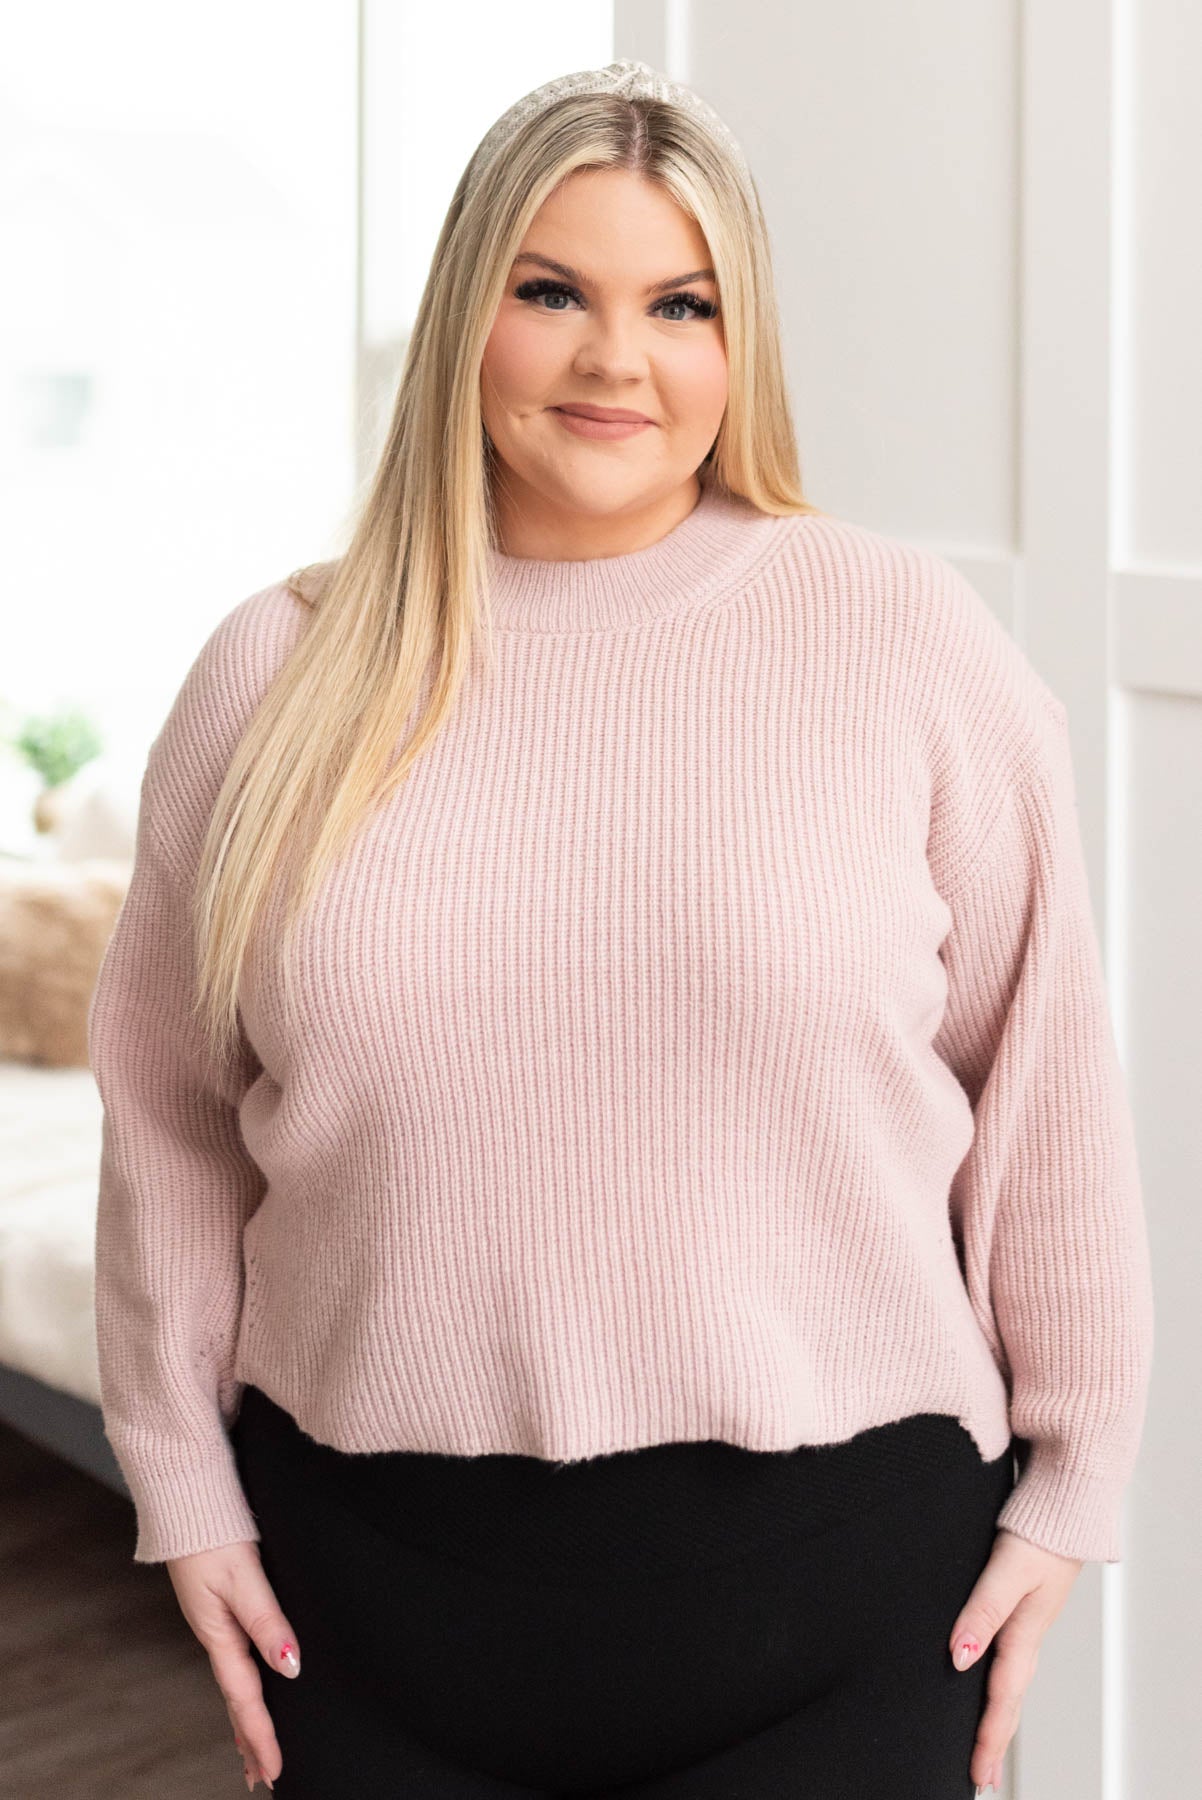 Long sleeve blush knit sweater